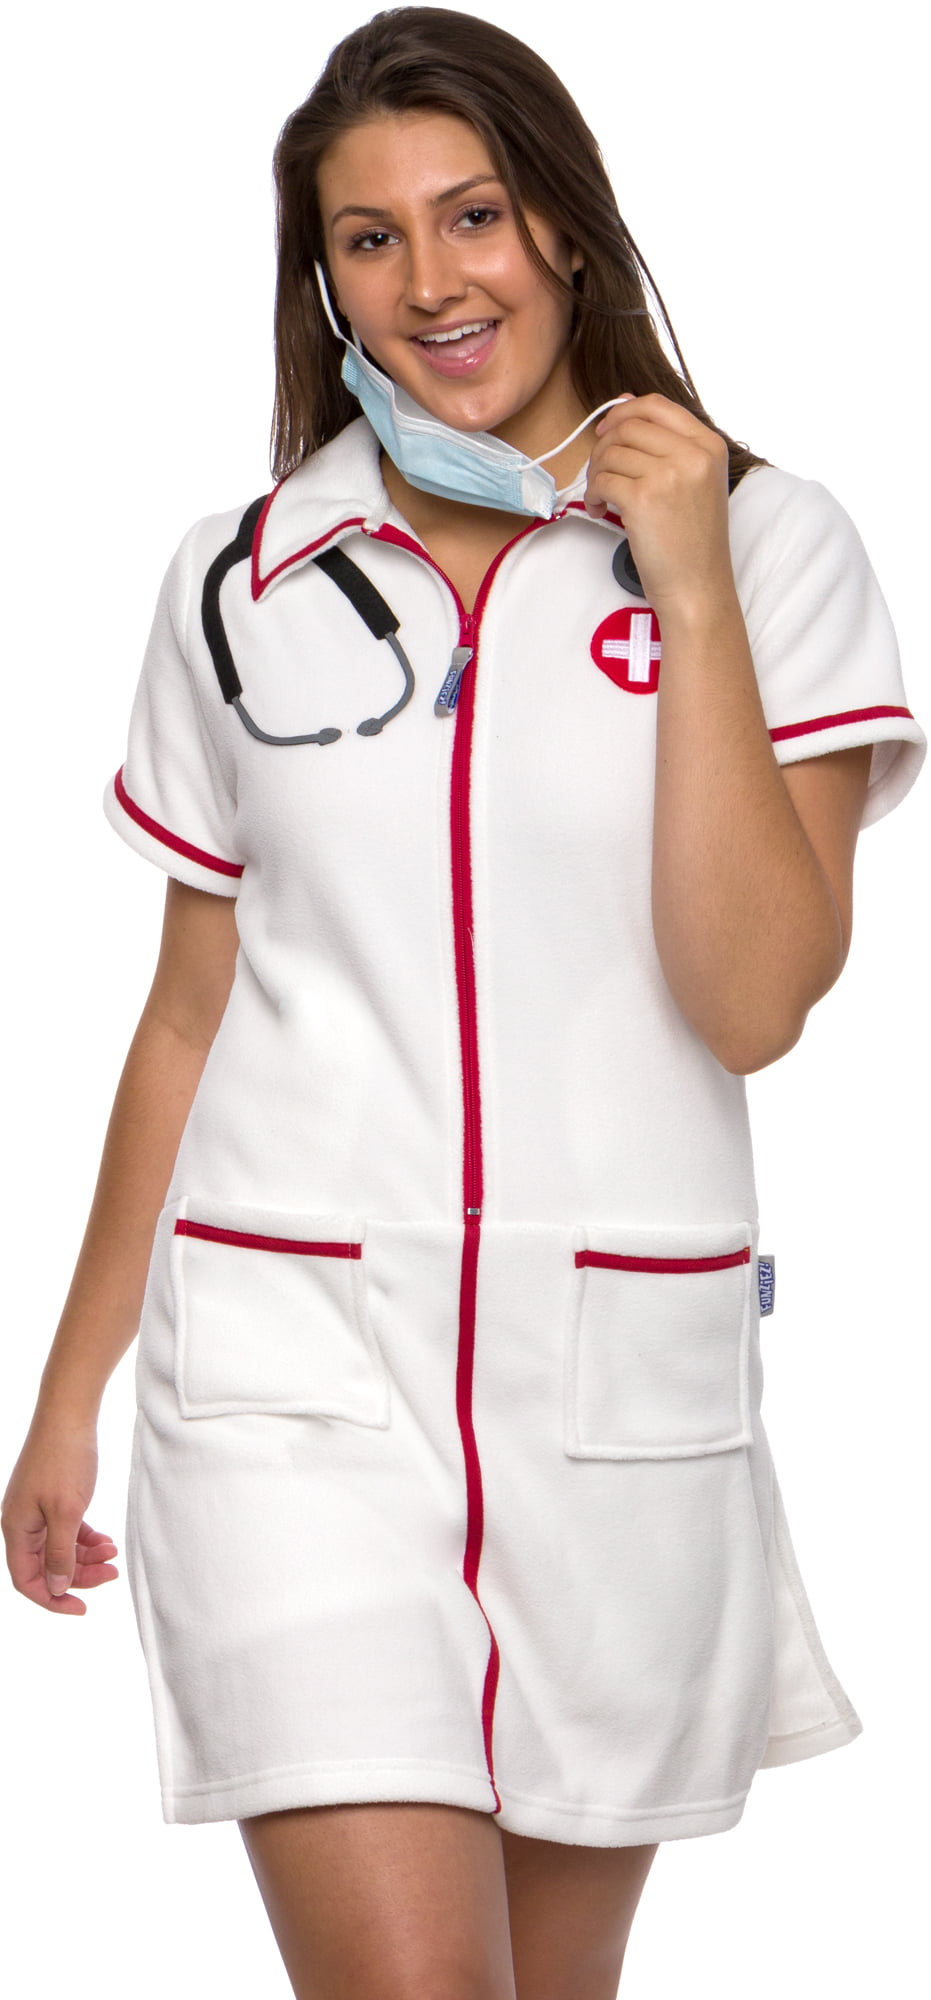 UNIFORM CRAFT Cotton Twill Nurse Uniforms - Ideal for Medical Scrubs for  Women | Scrub Suit for Women | Scrub Suit for Nurses | Hospital Uniform,  NT11 Light Purple_XL : Amazon.in: Industrial & Scientific